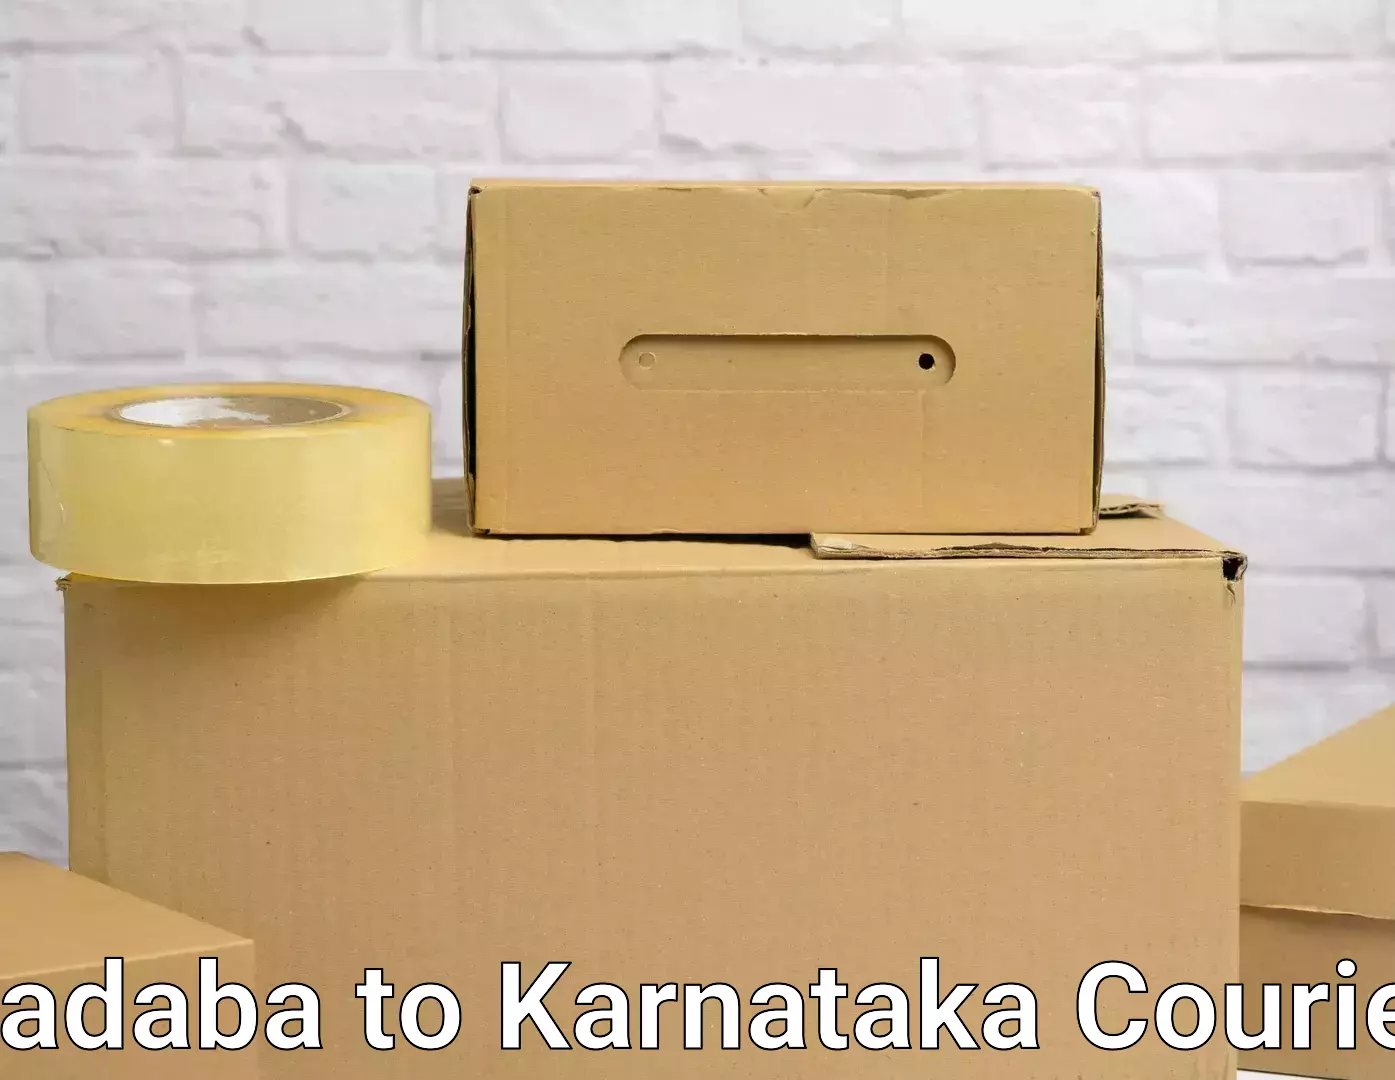 Home moving experts Kadaba to Yellapur